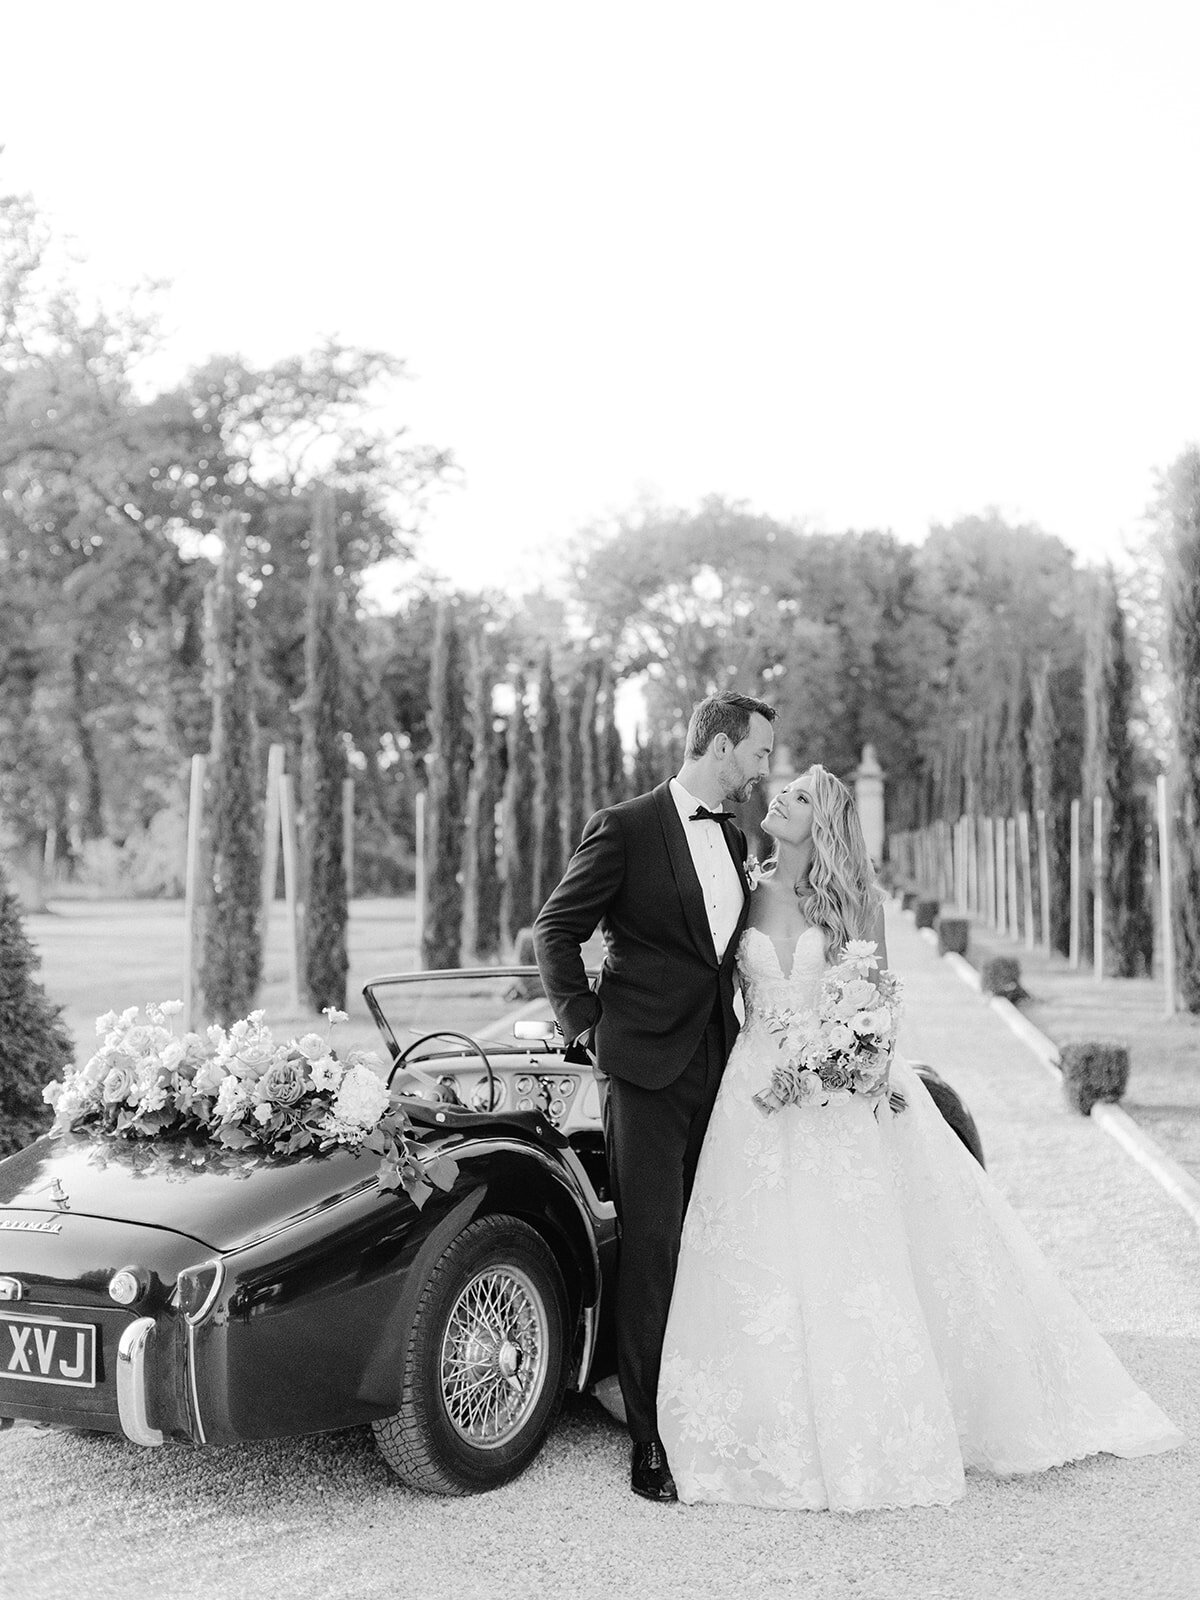 Chateau-de-Tourreau-France-wedding-by-Julia-Kaptelova_Photography-0456